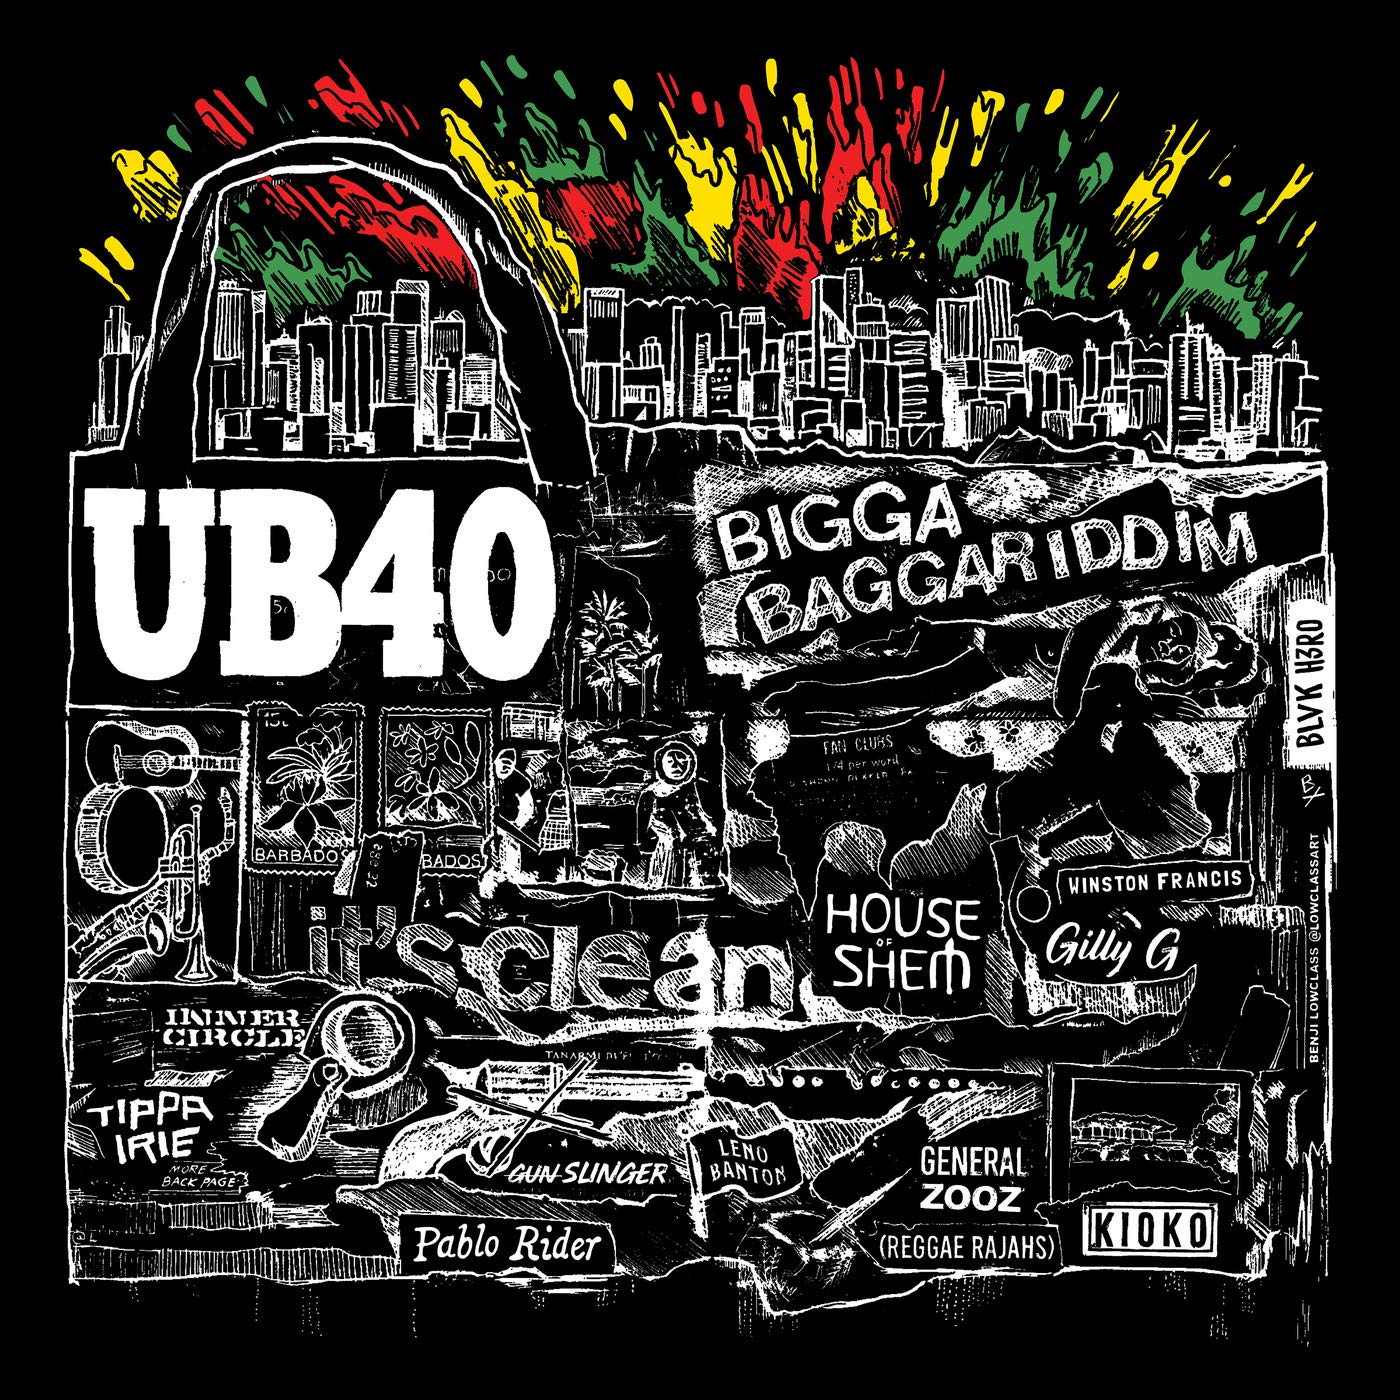 UB40-Bigga Baggariddim-CD-FLAC-2021-401